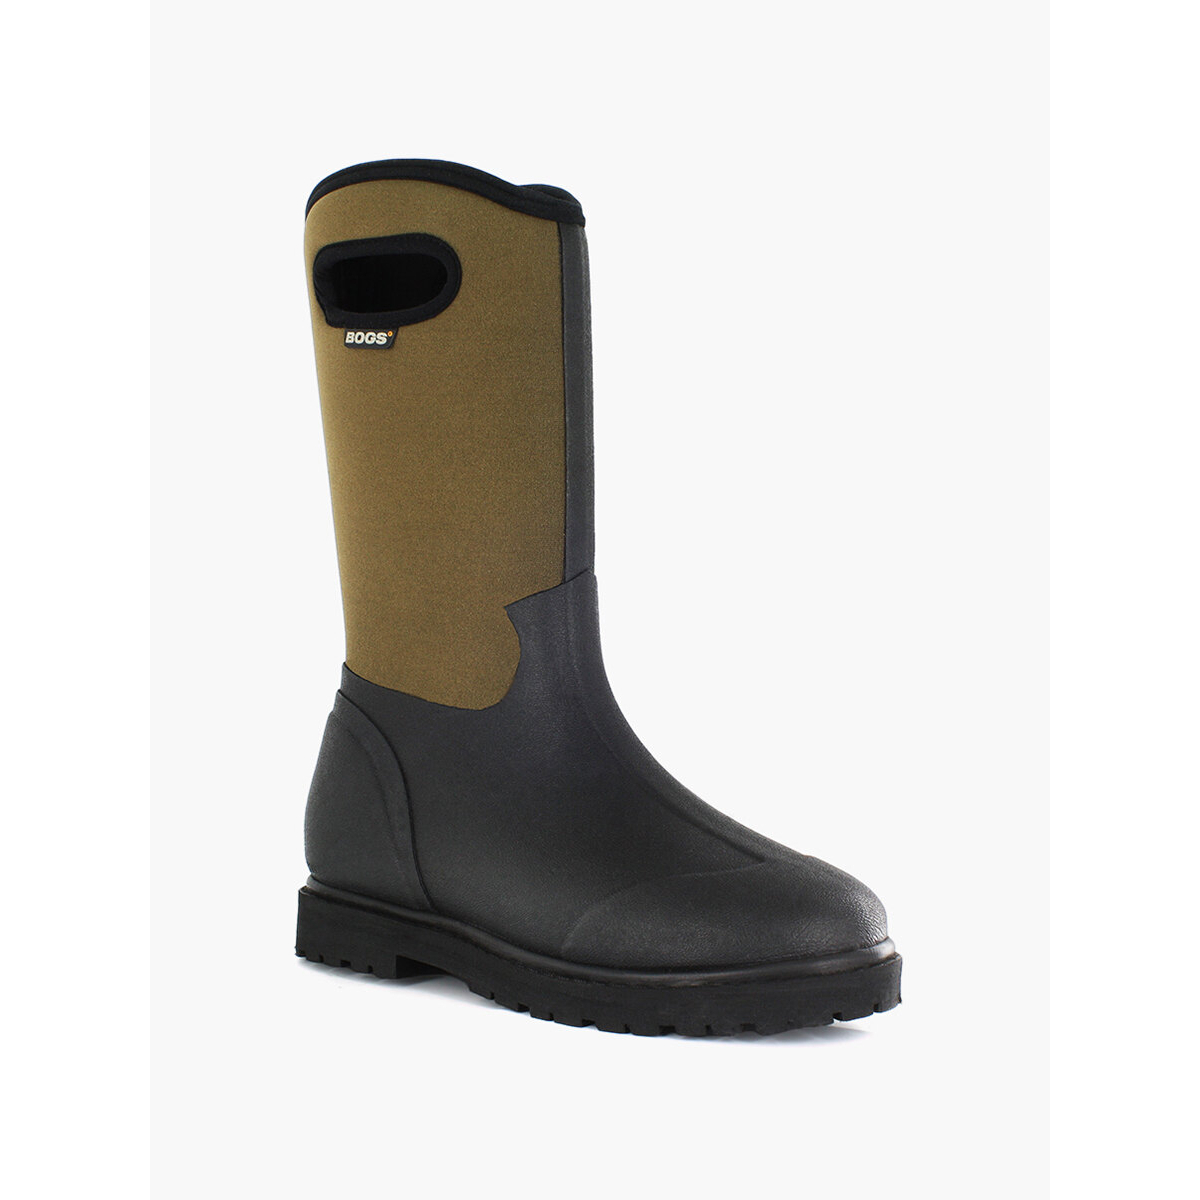 BOGS Men's Roper Insulated Waterproof Soft Toe Work Boots Black & Brown - 69162-963 - BLACK, 12